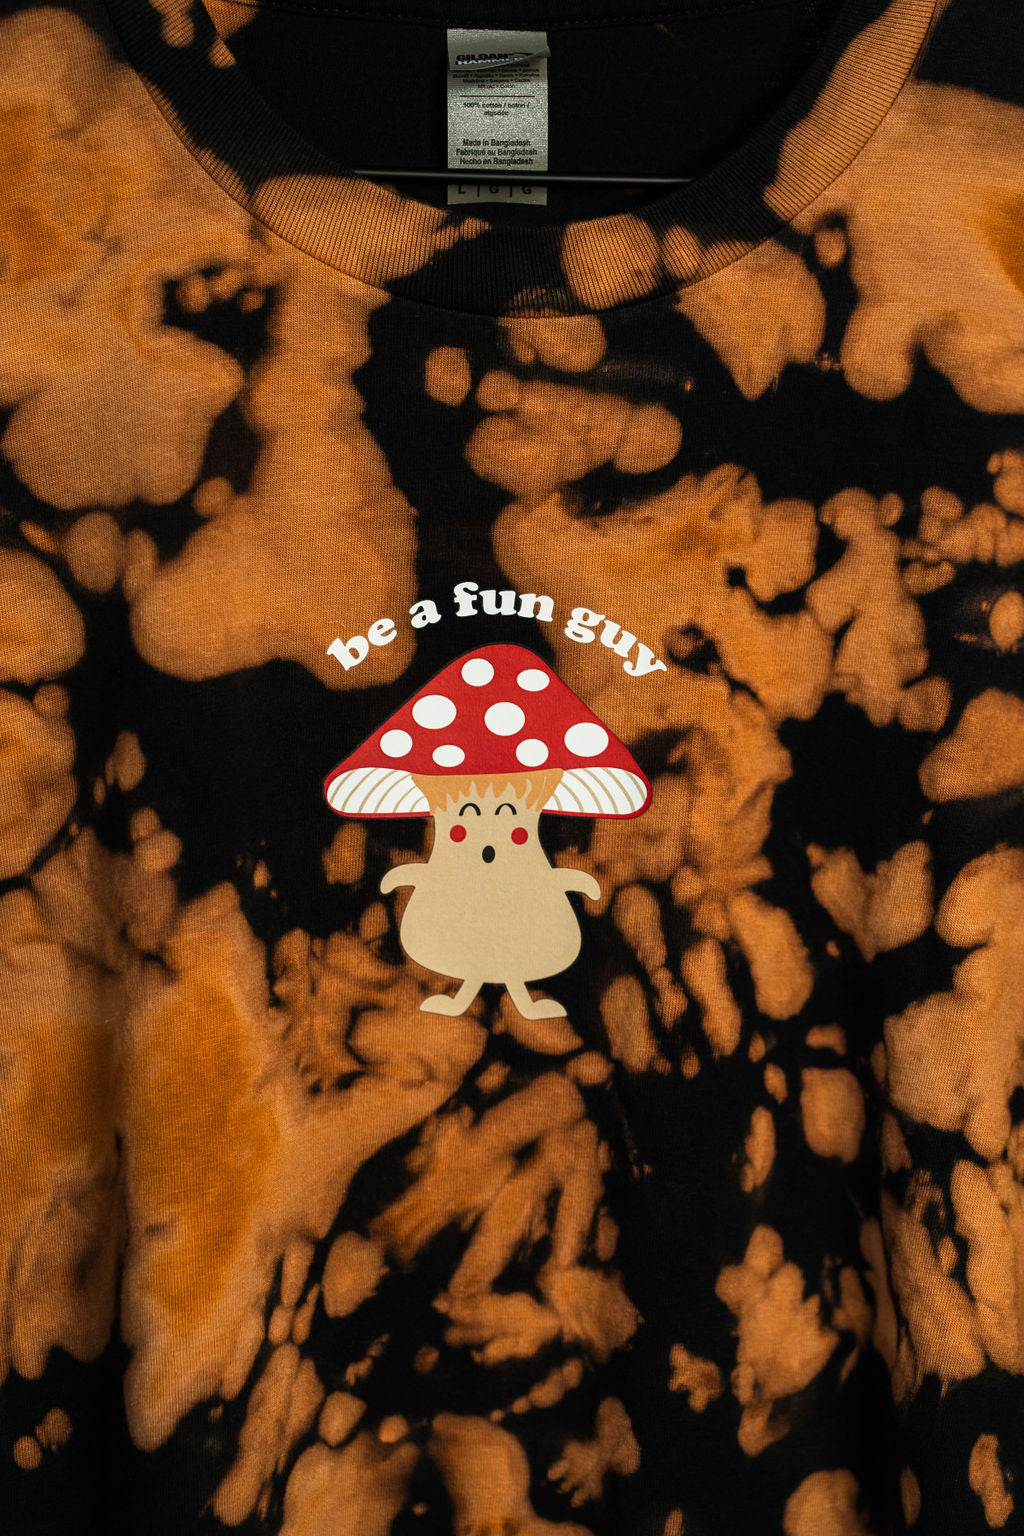 "Be A Fun Guy" Bleach Dye Shirt